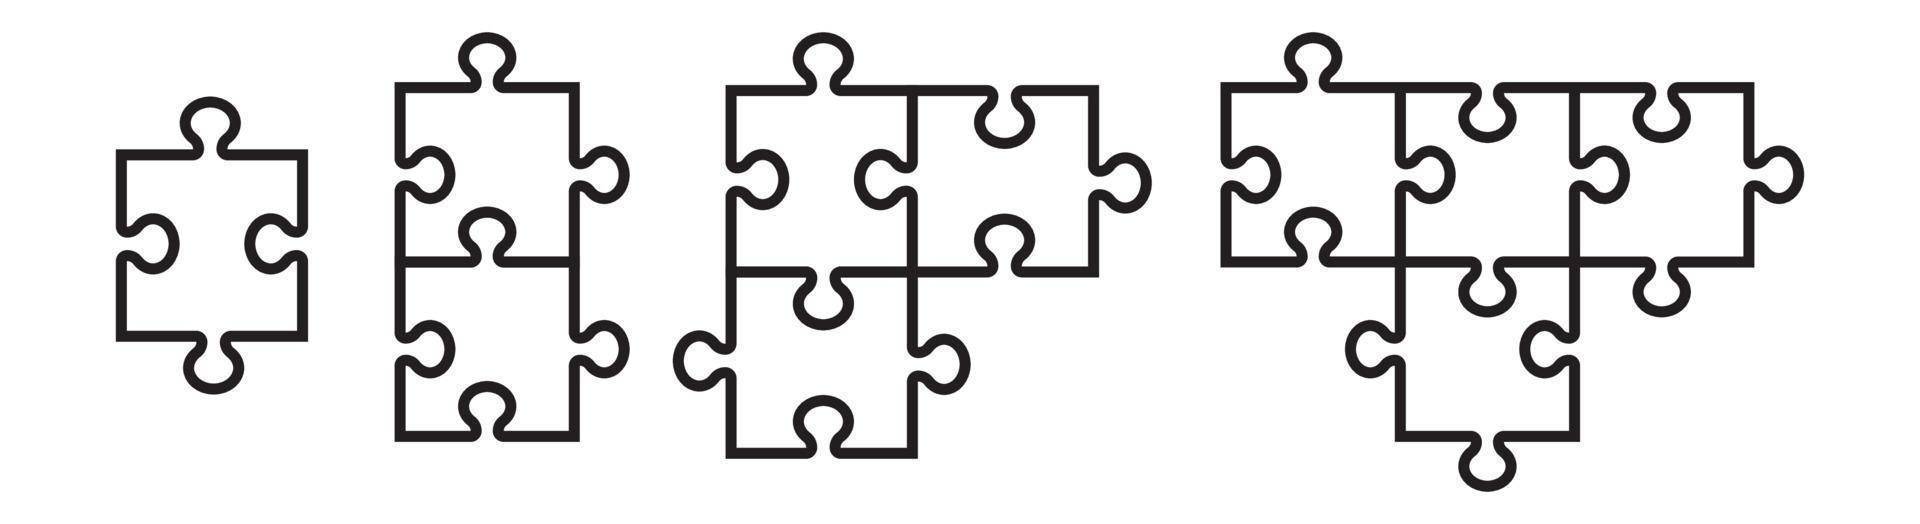 Puzzle icon design element suitable for websites, print design or app vector